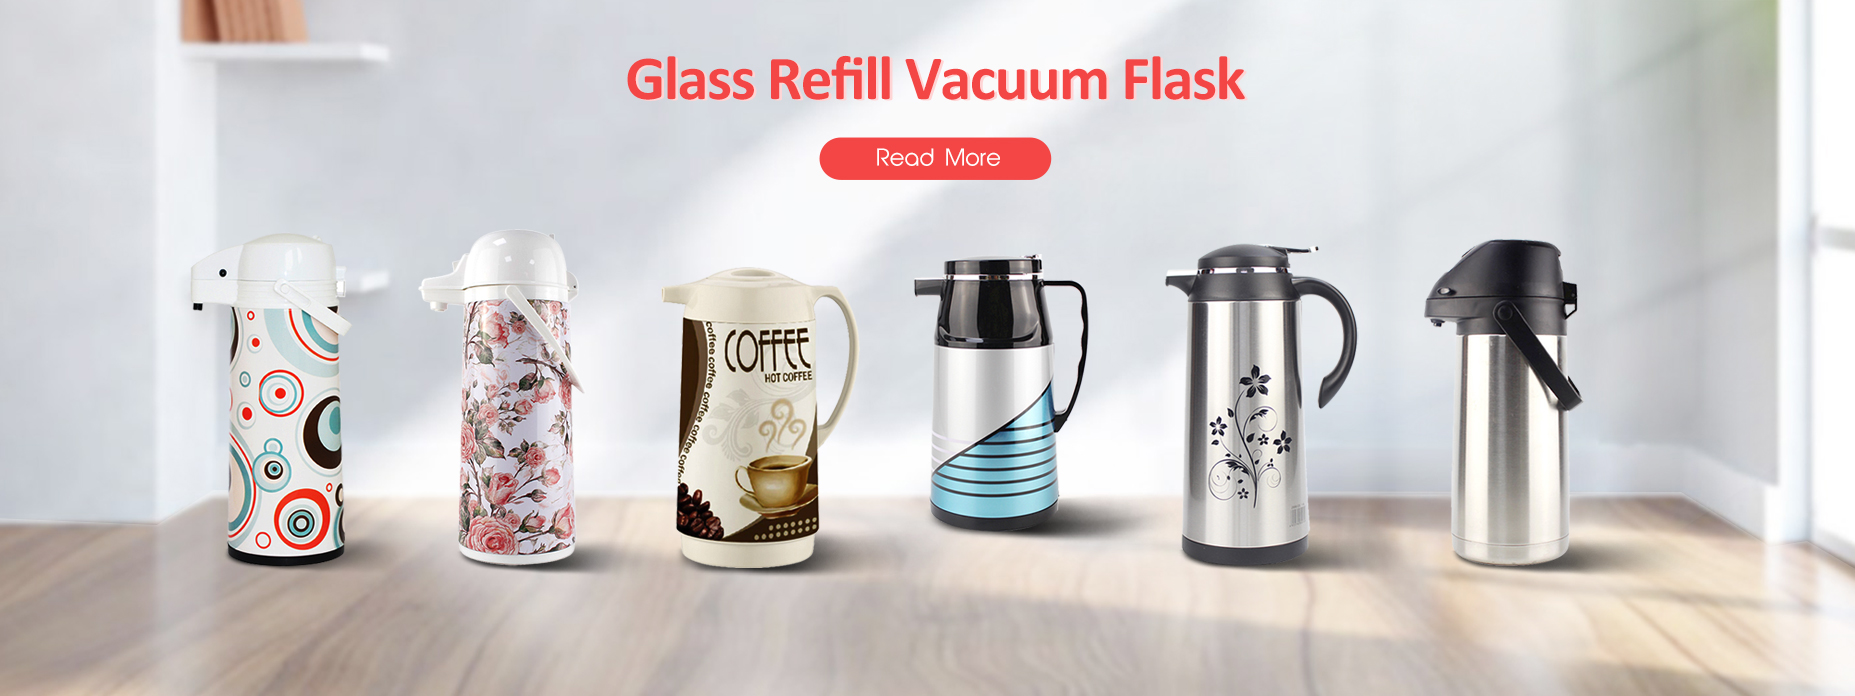 glass refill vacuum flask